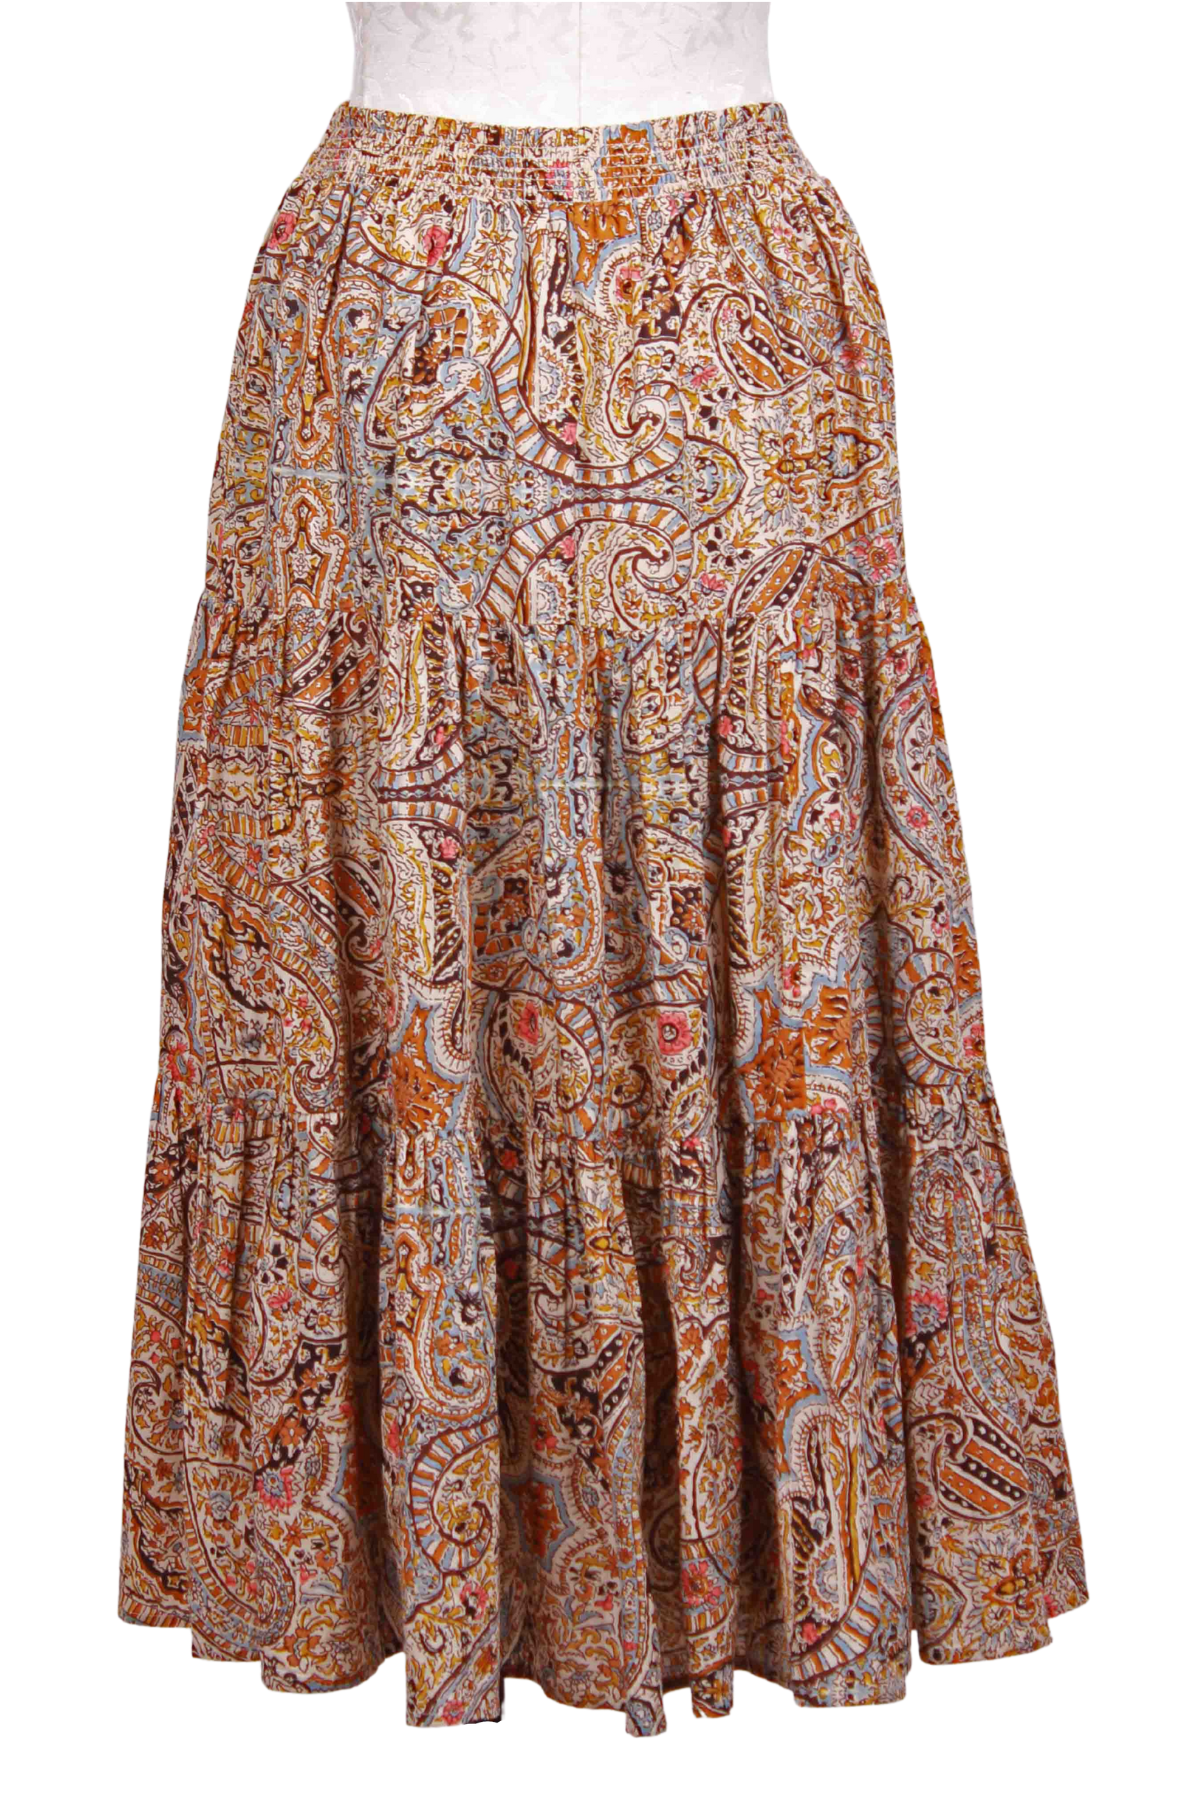 back view of Kaleidoscope Tali Midi Skirt by Cleobella